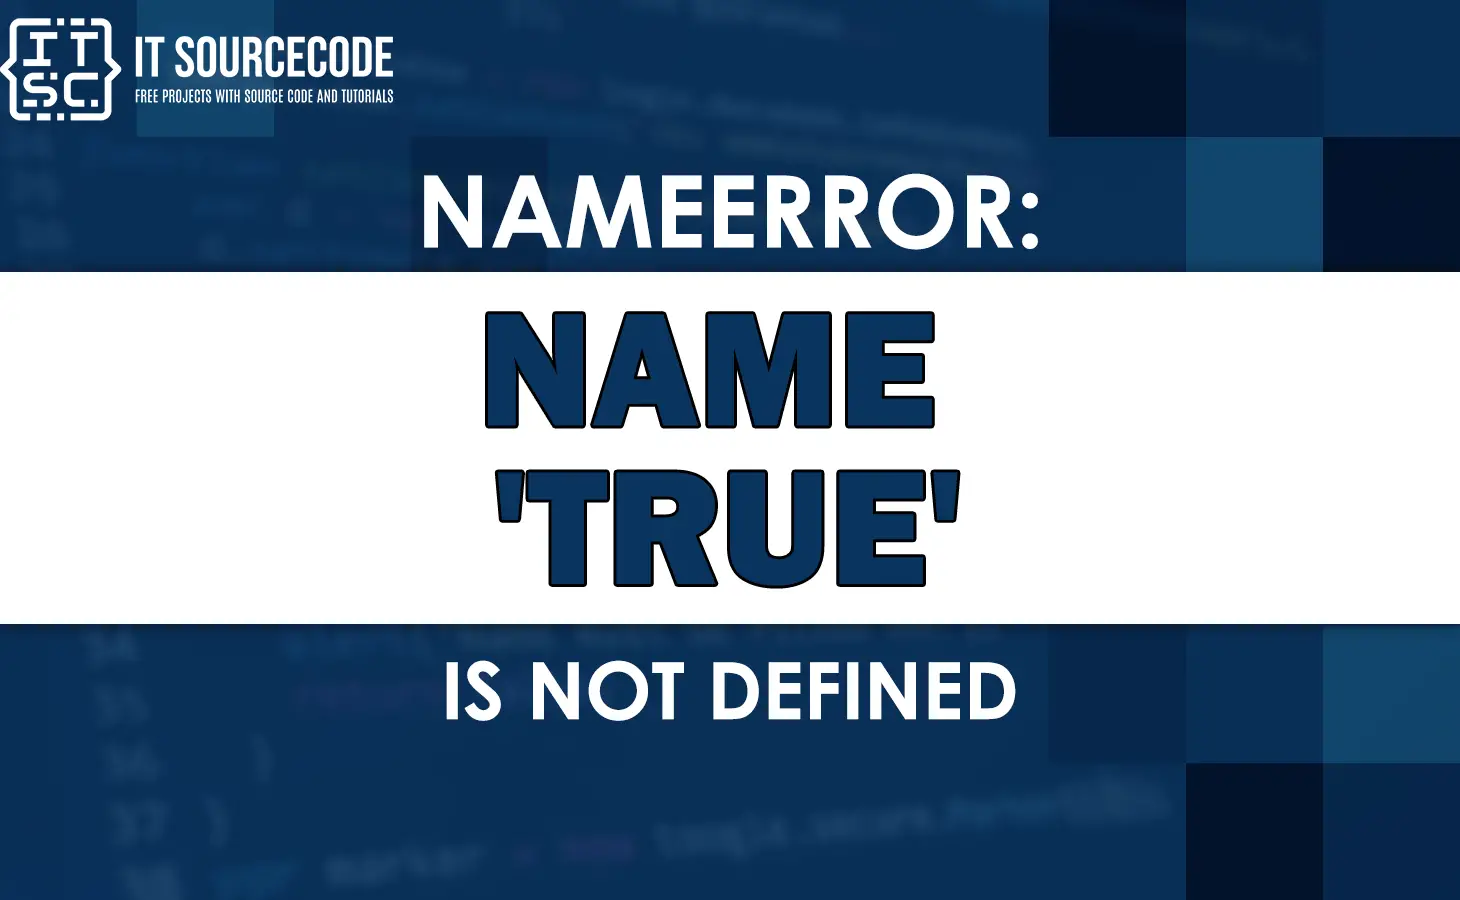 Nameerror name true is not defined